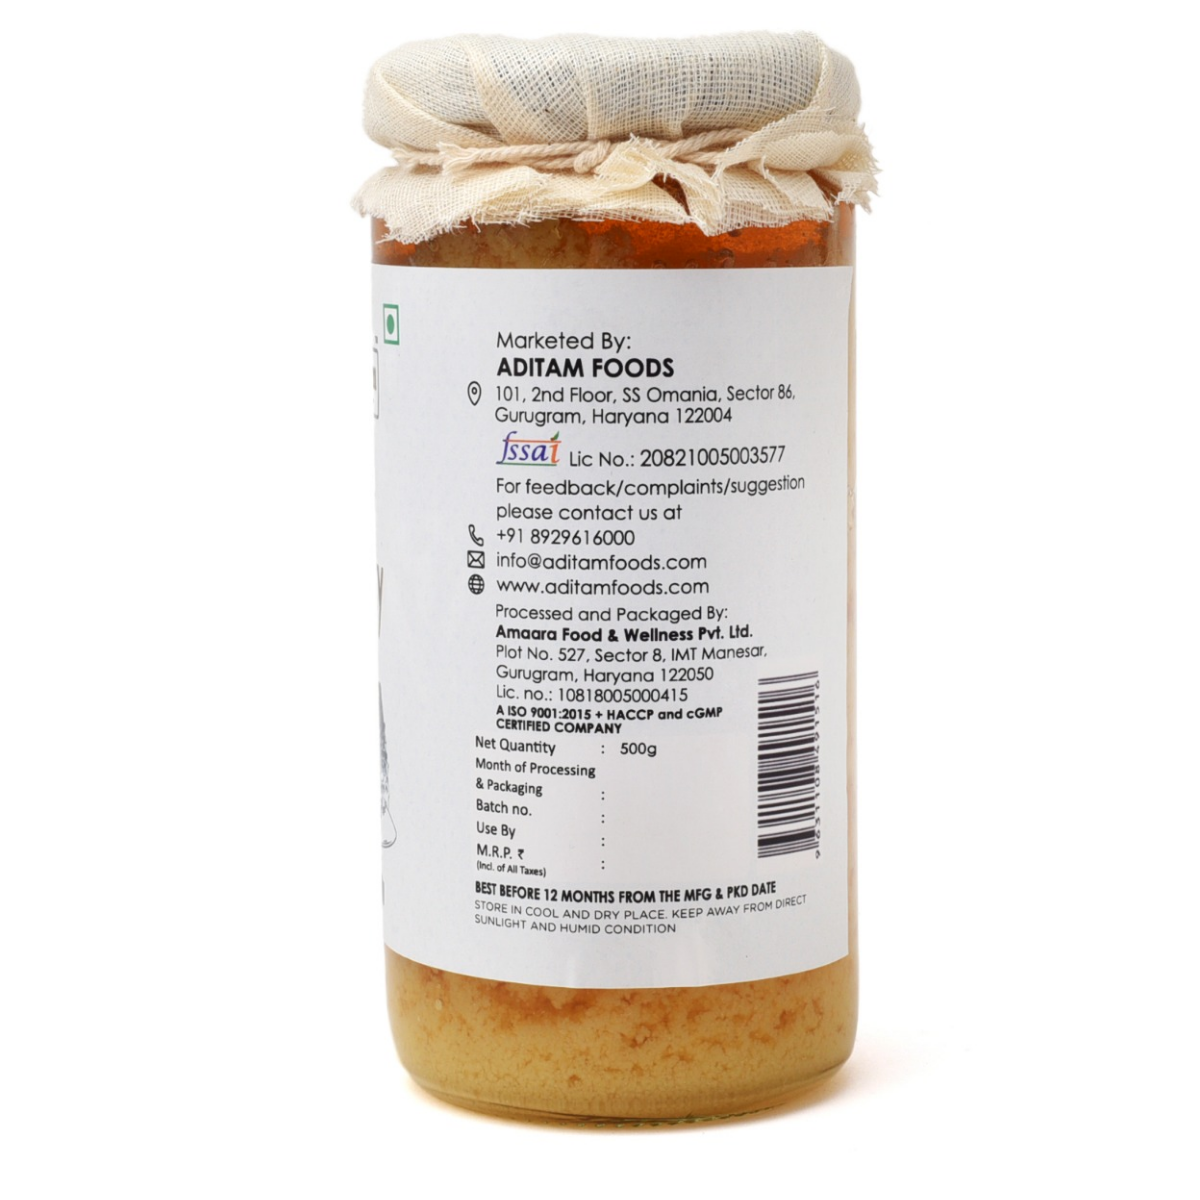 Product: Aditam Natural Wild Honey